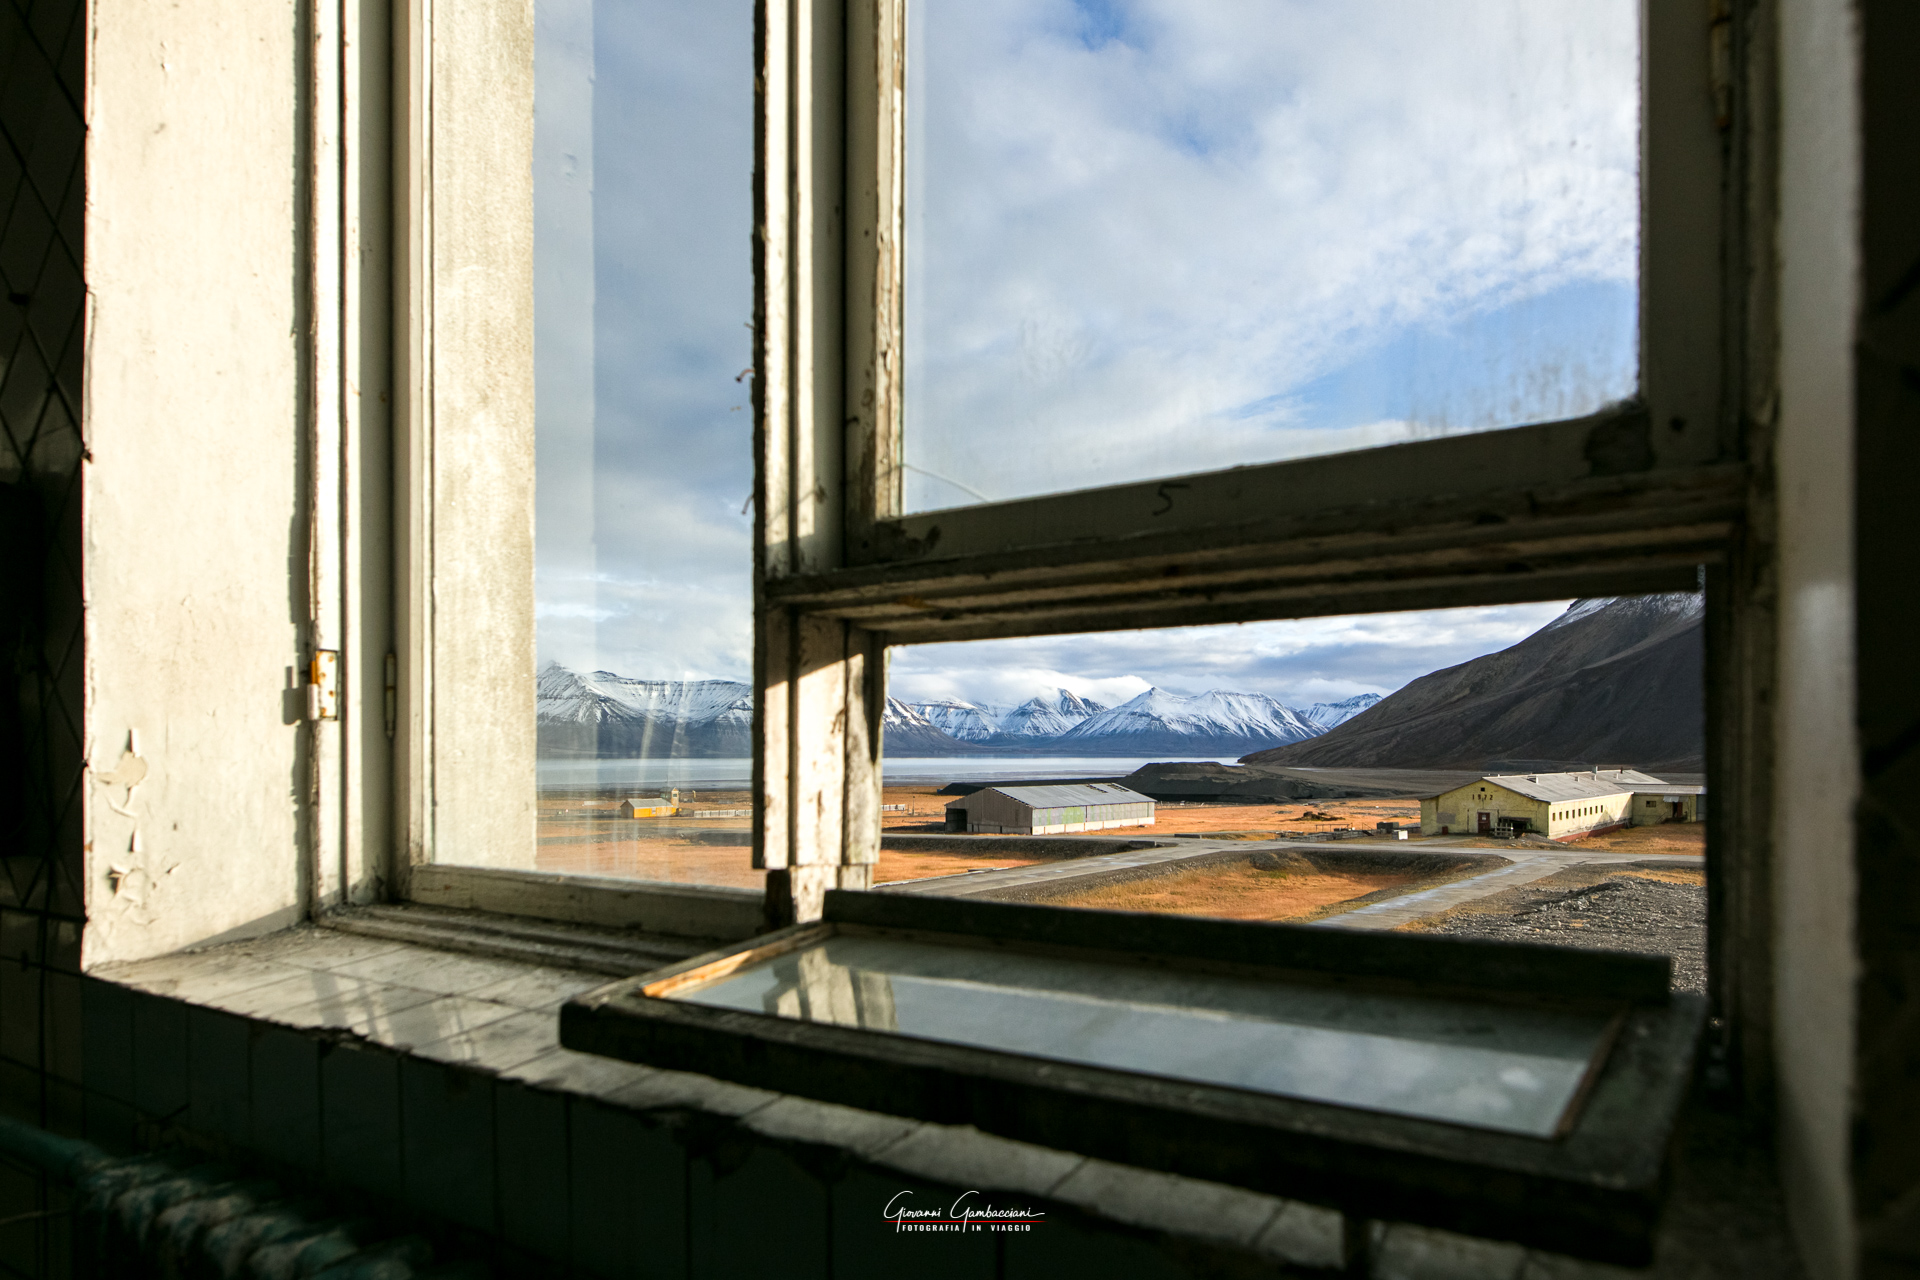 02_Svalbard_Pyramiden_Ristorante15b